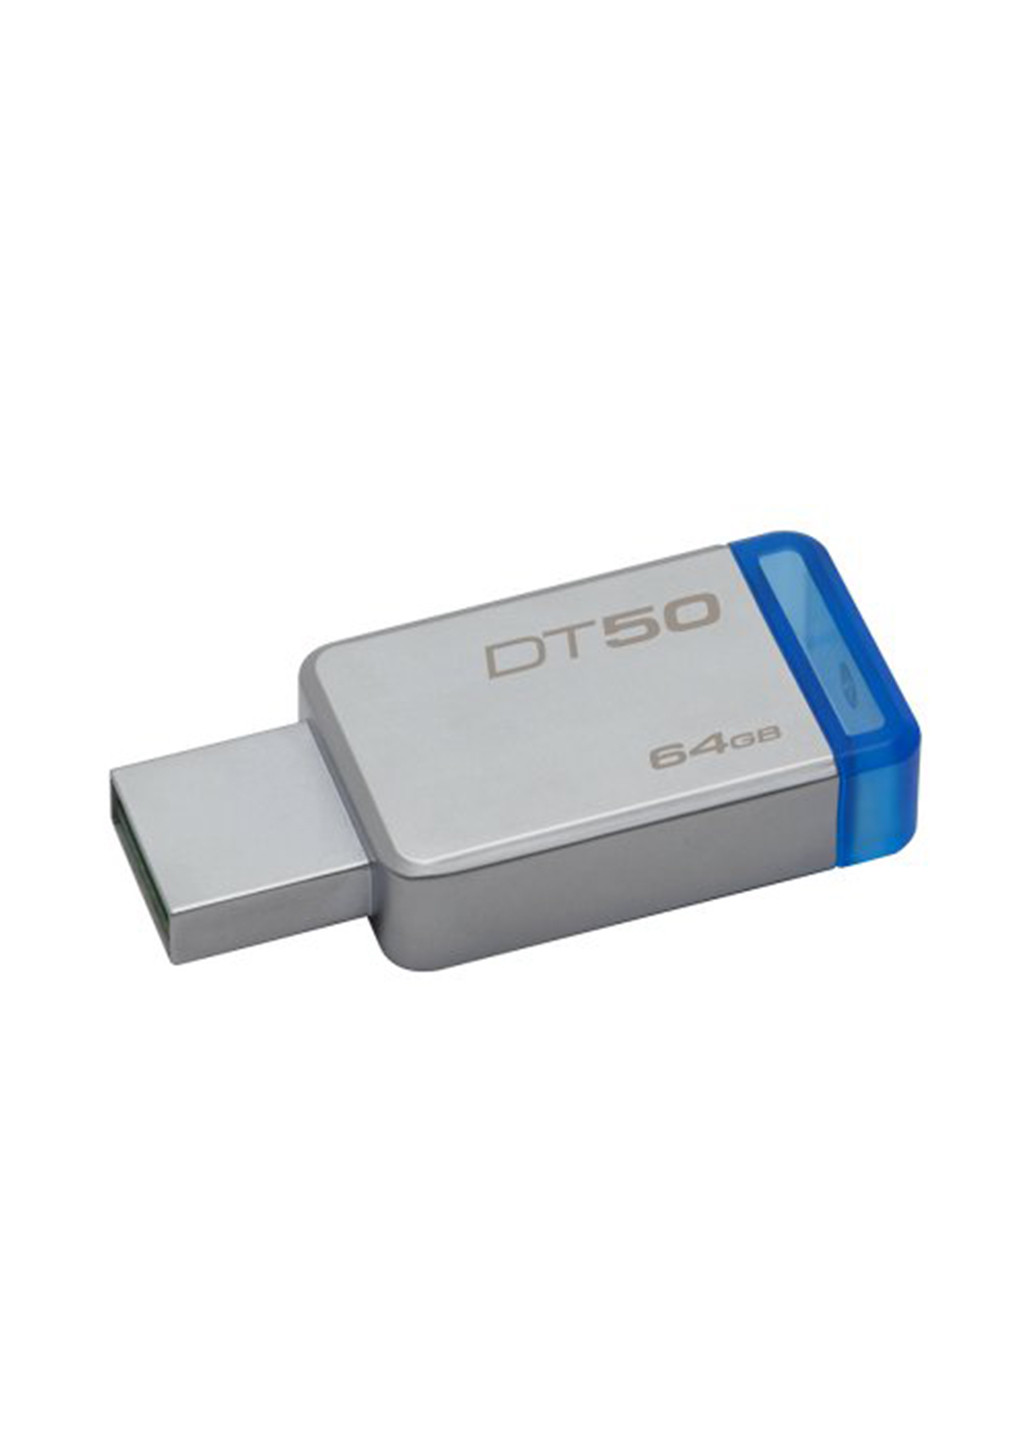 Флеш память USB DataTraveler 50 64GB Blue (DT50/64GB) Kingston флеш память usb kingston datatraveler 50 64gb blue (dt50/64gb) (139256221)